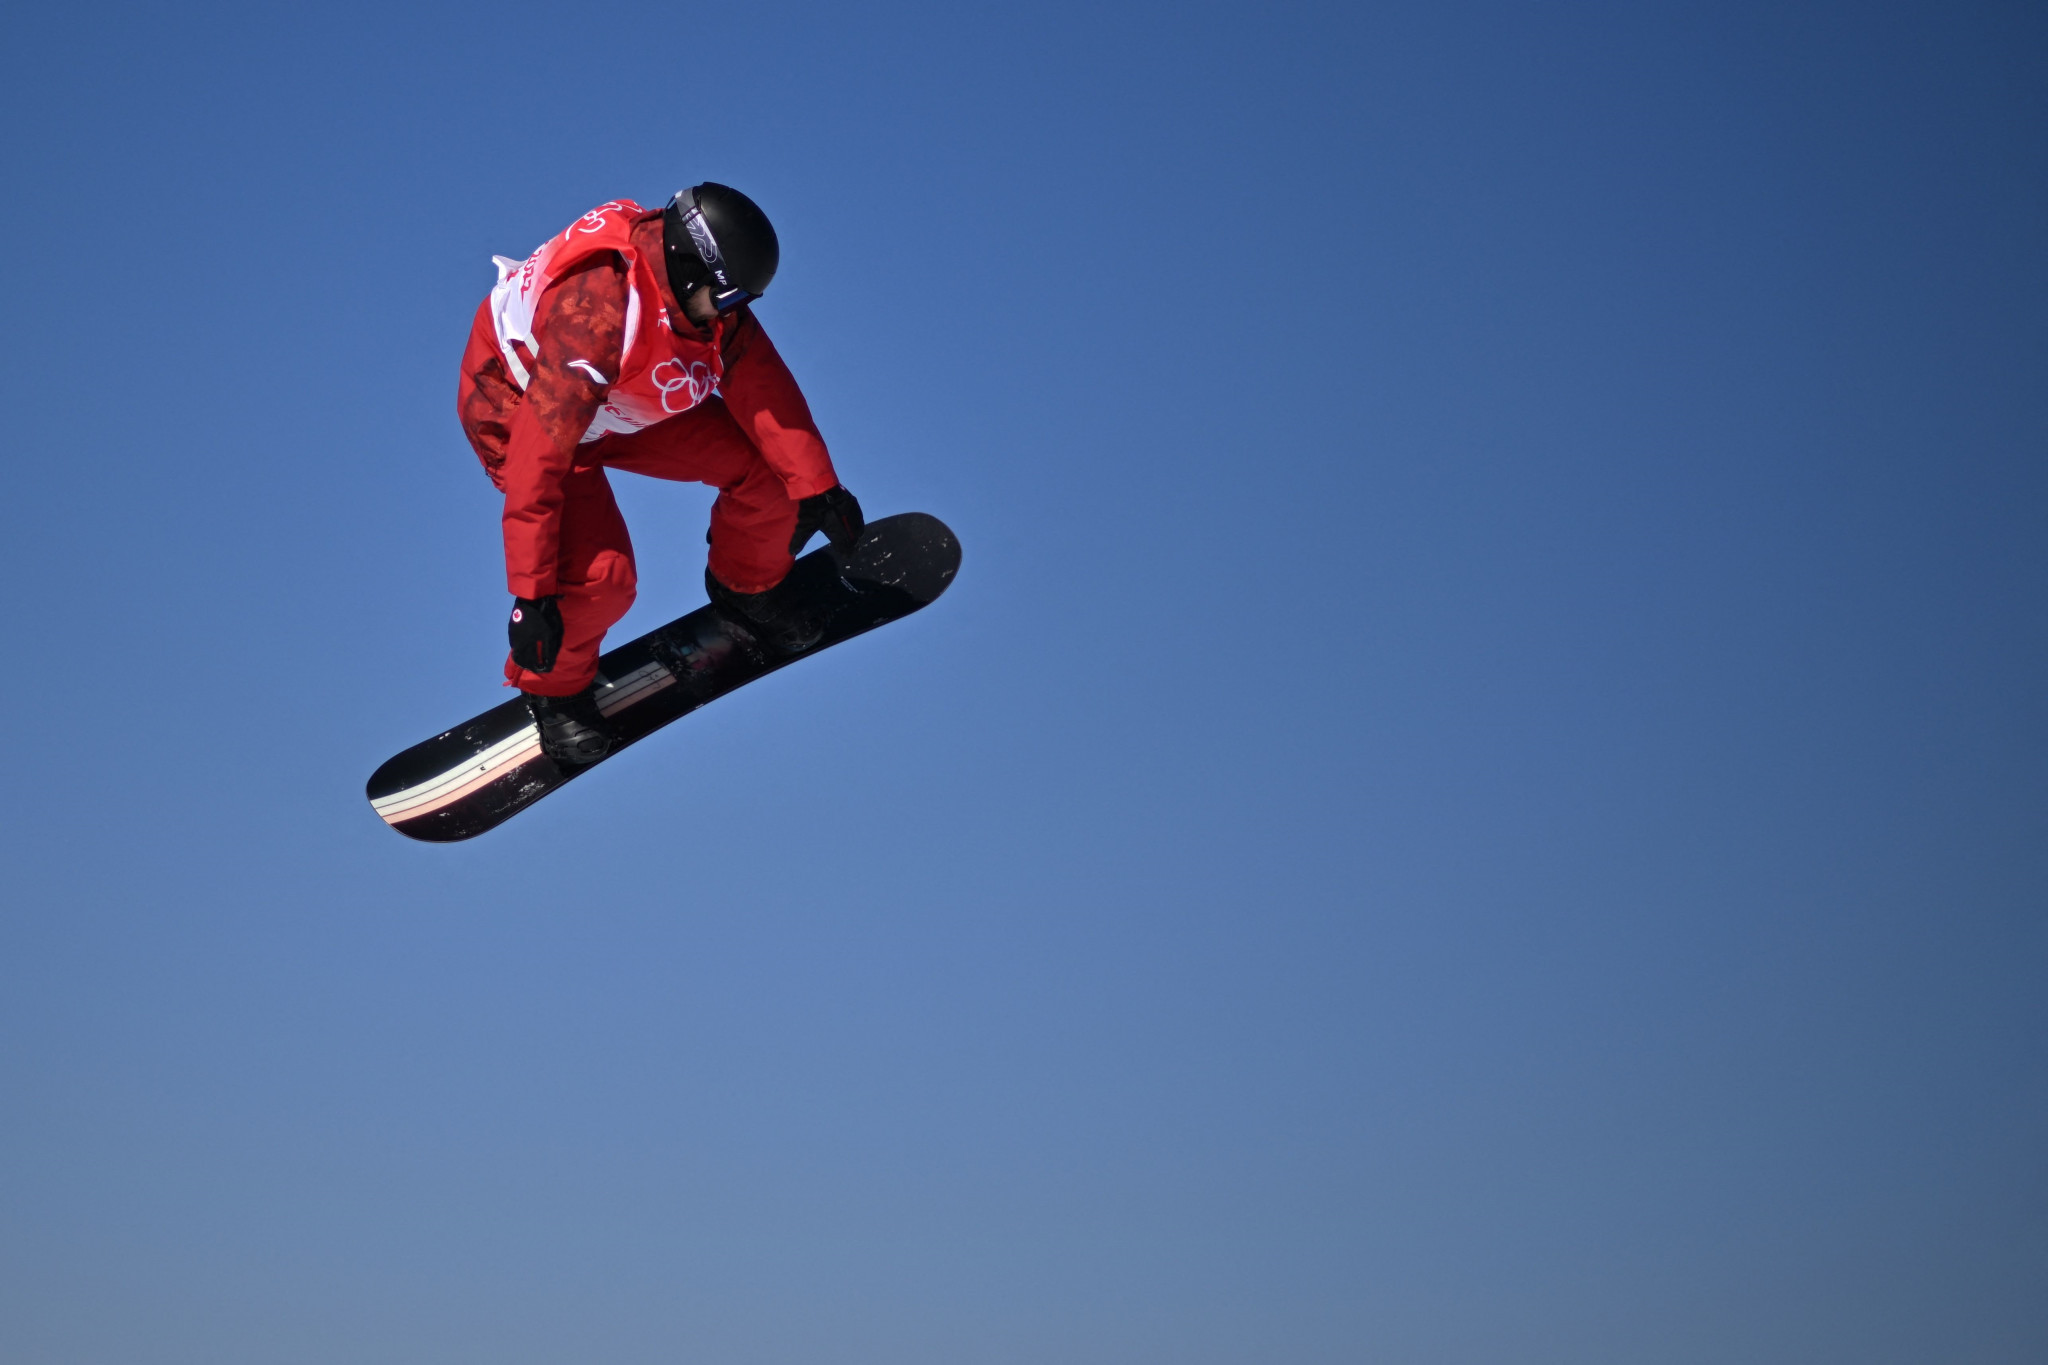 Calls for snowboard judging improvements after Parrot error at Beijing 2022